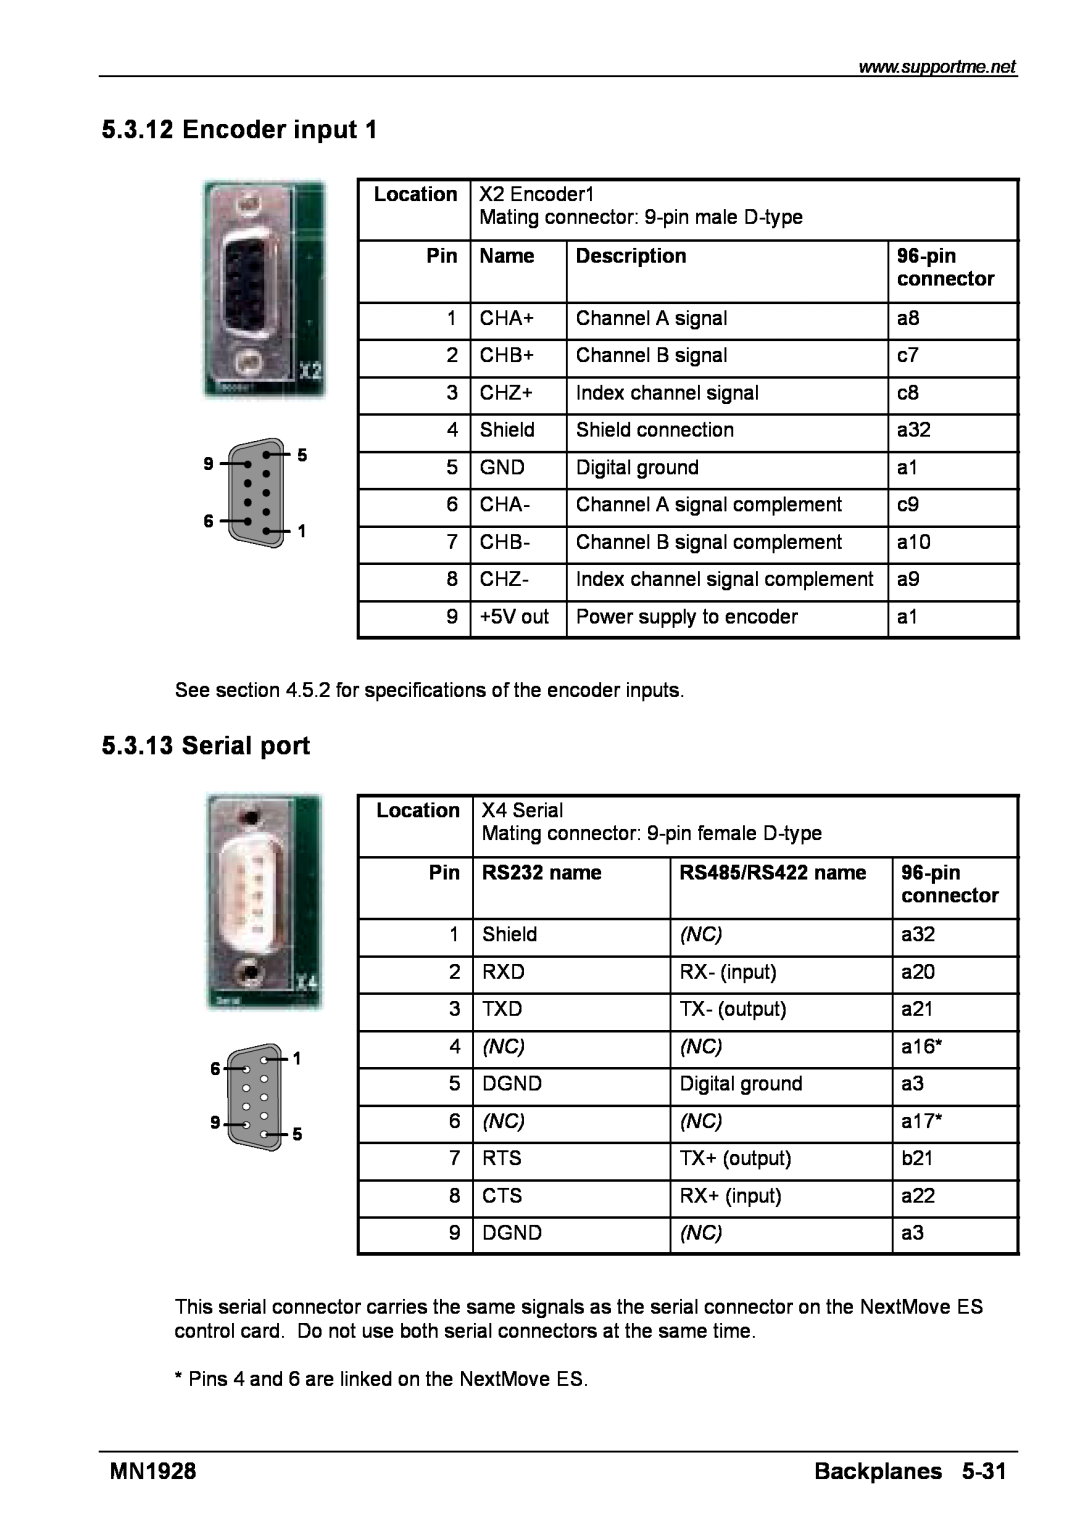 Baldor MN1928 Encoder input, Serial port, Backplanes, Location, Name, Description, 96-pin, RS232 name, RS485/RS422 name 